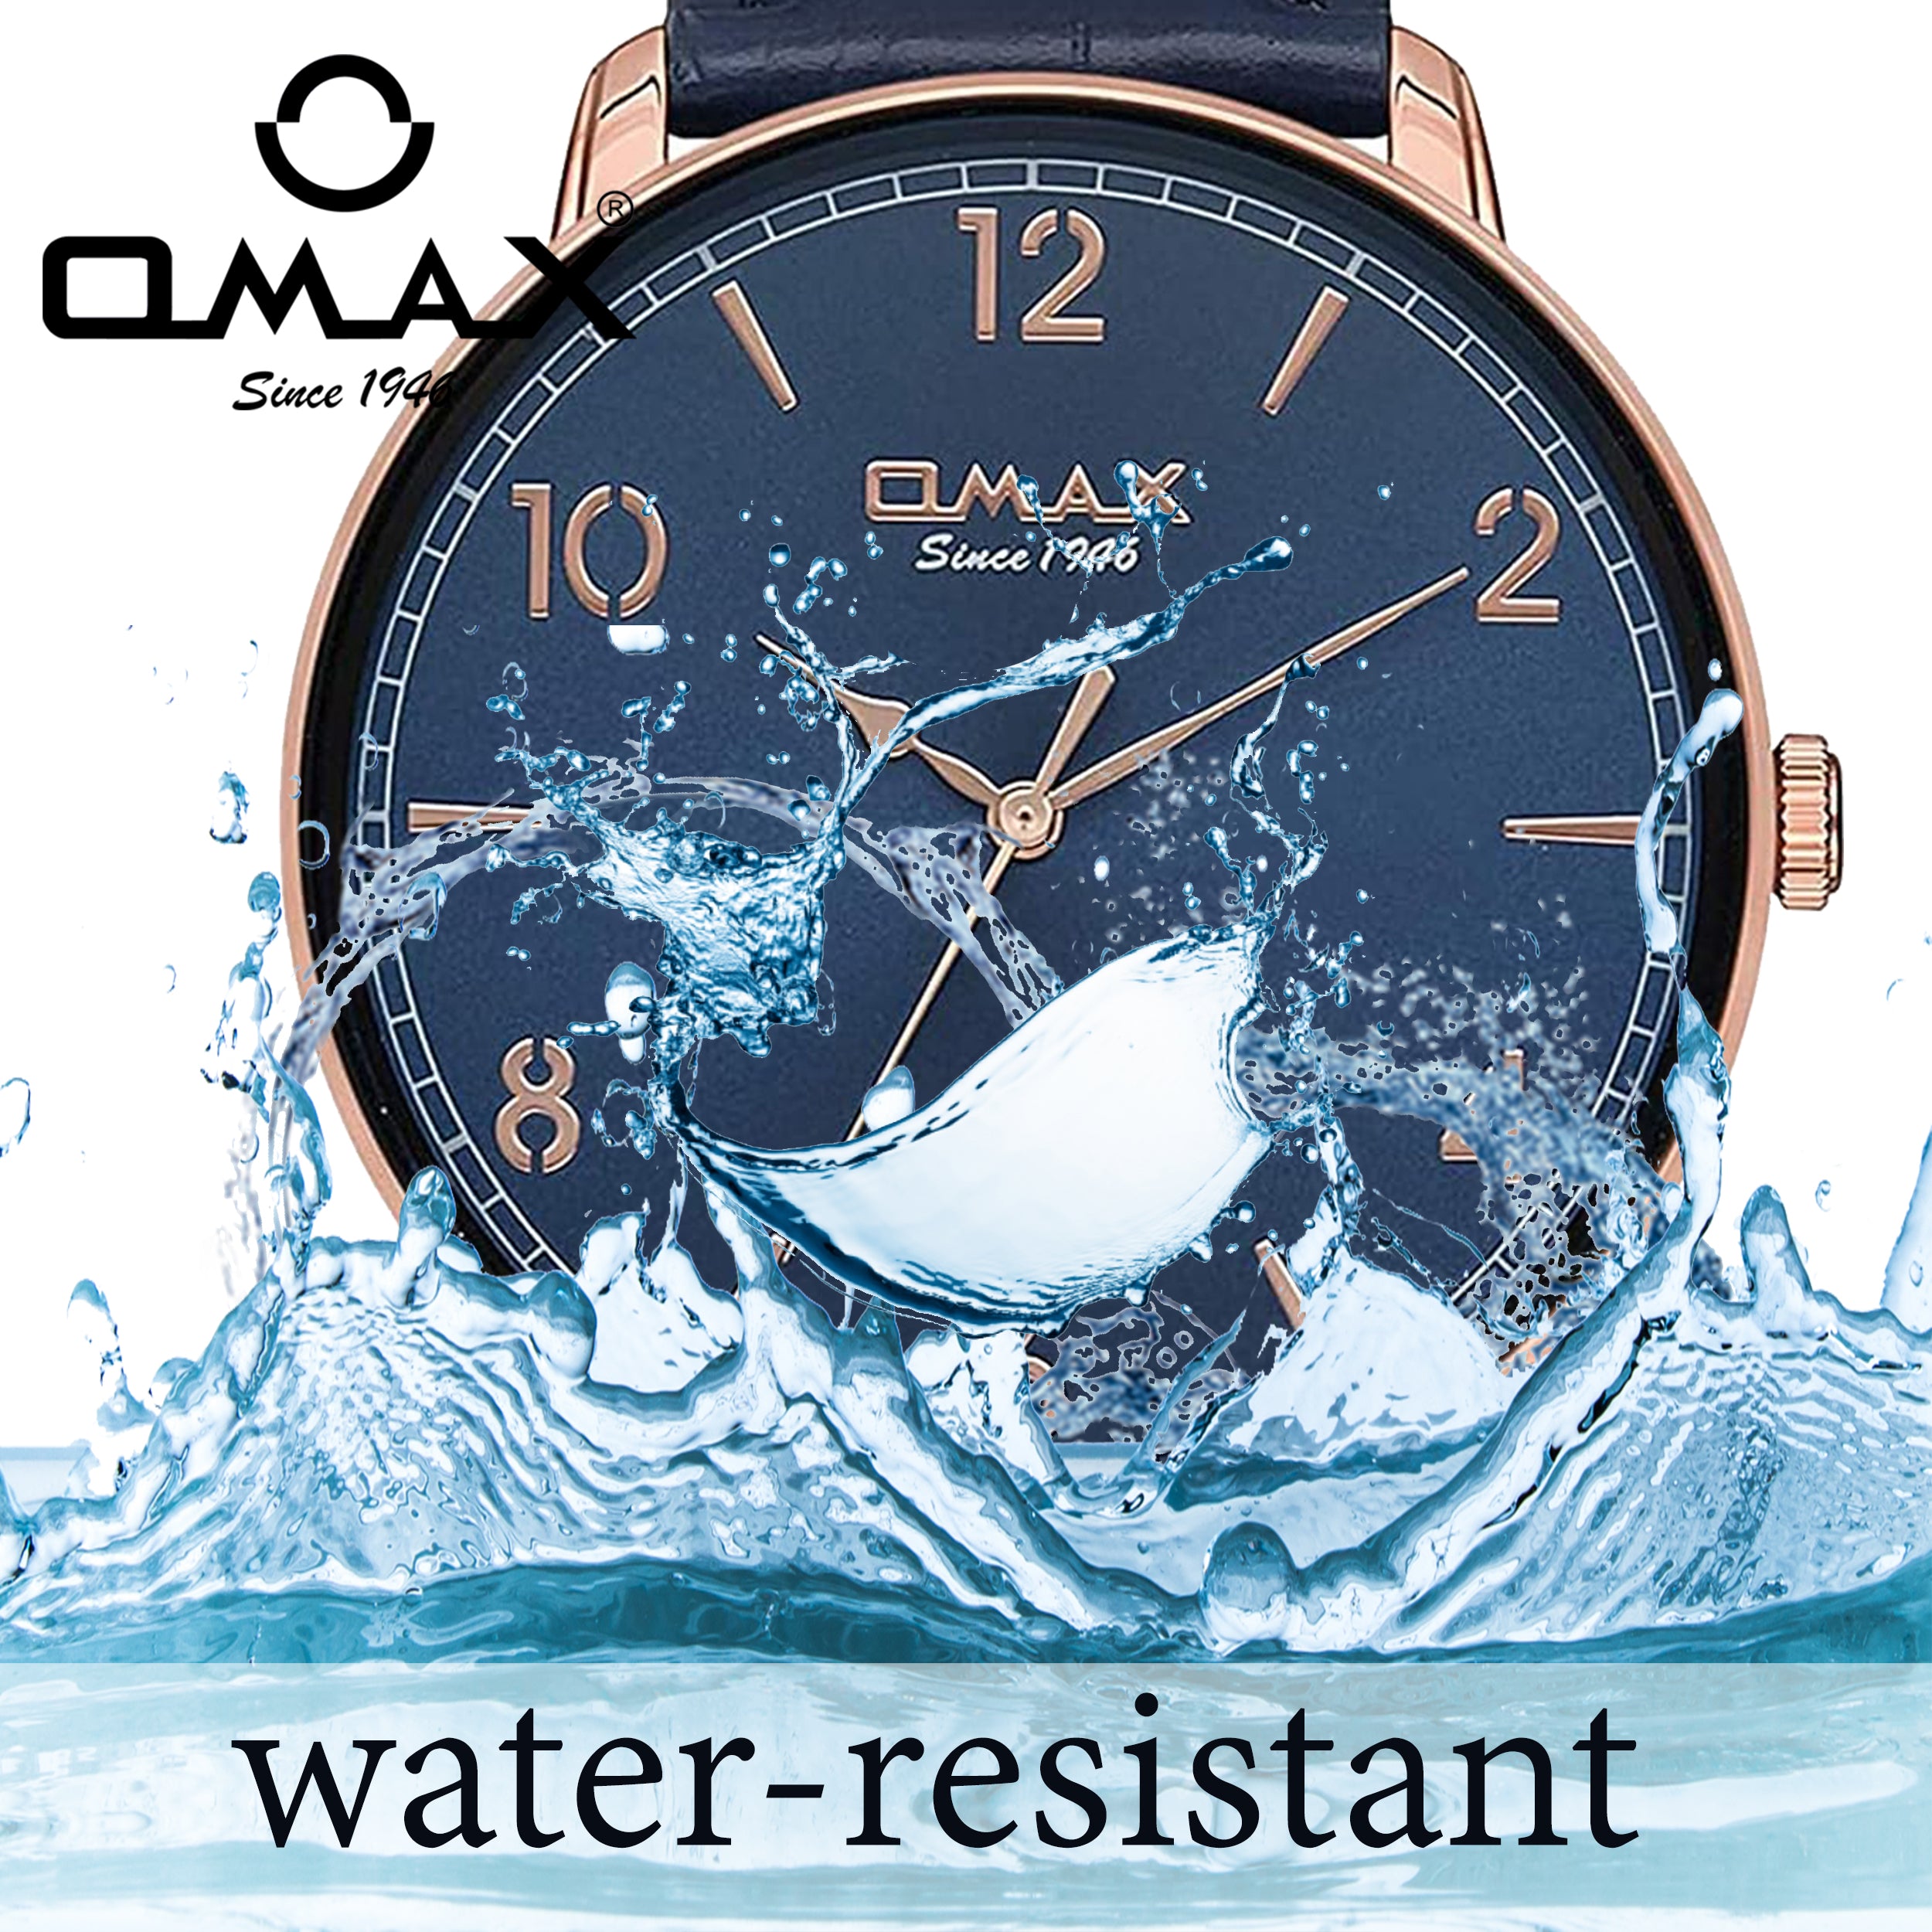 OMAX Quartz Battery Wristwatches for sale | eBay